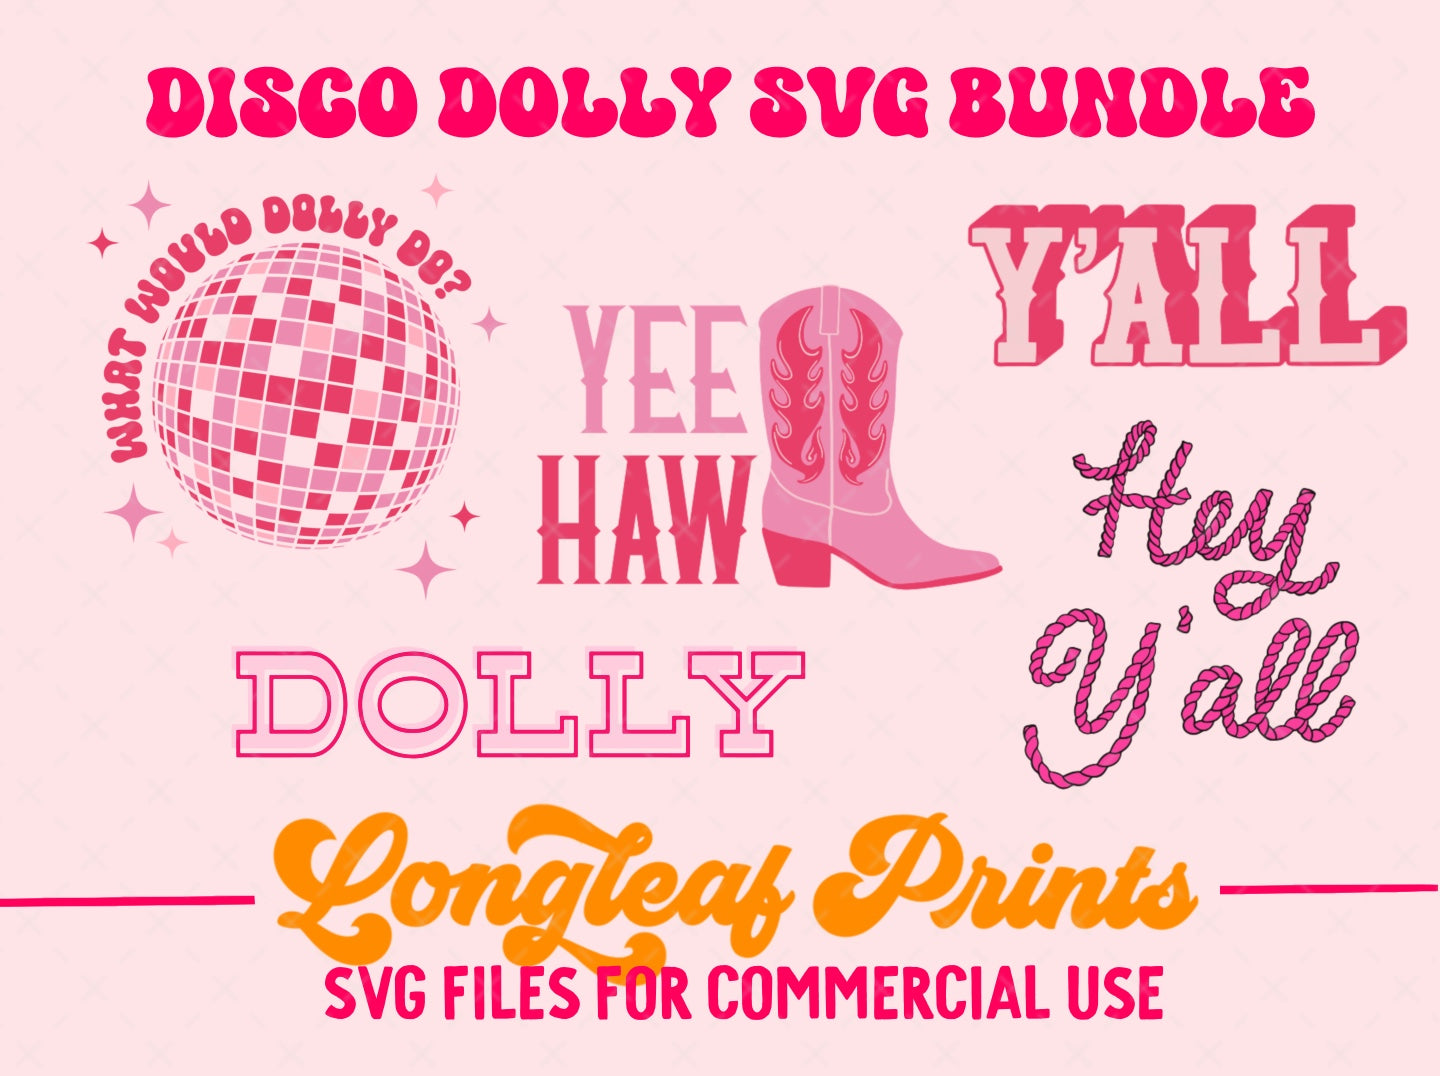 Disco Dolly SVG Bundle